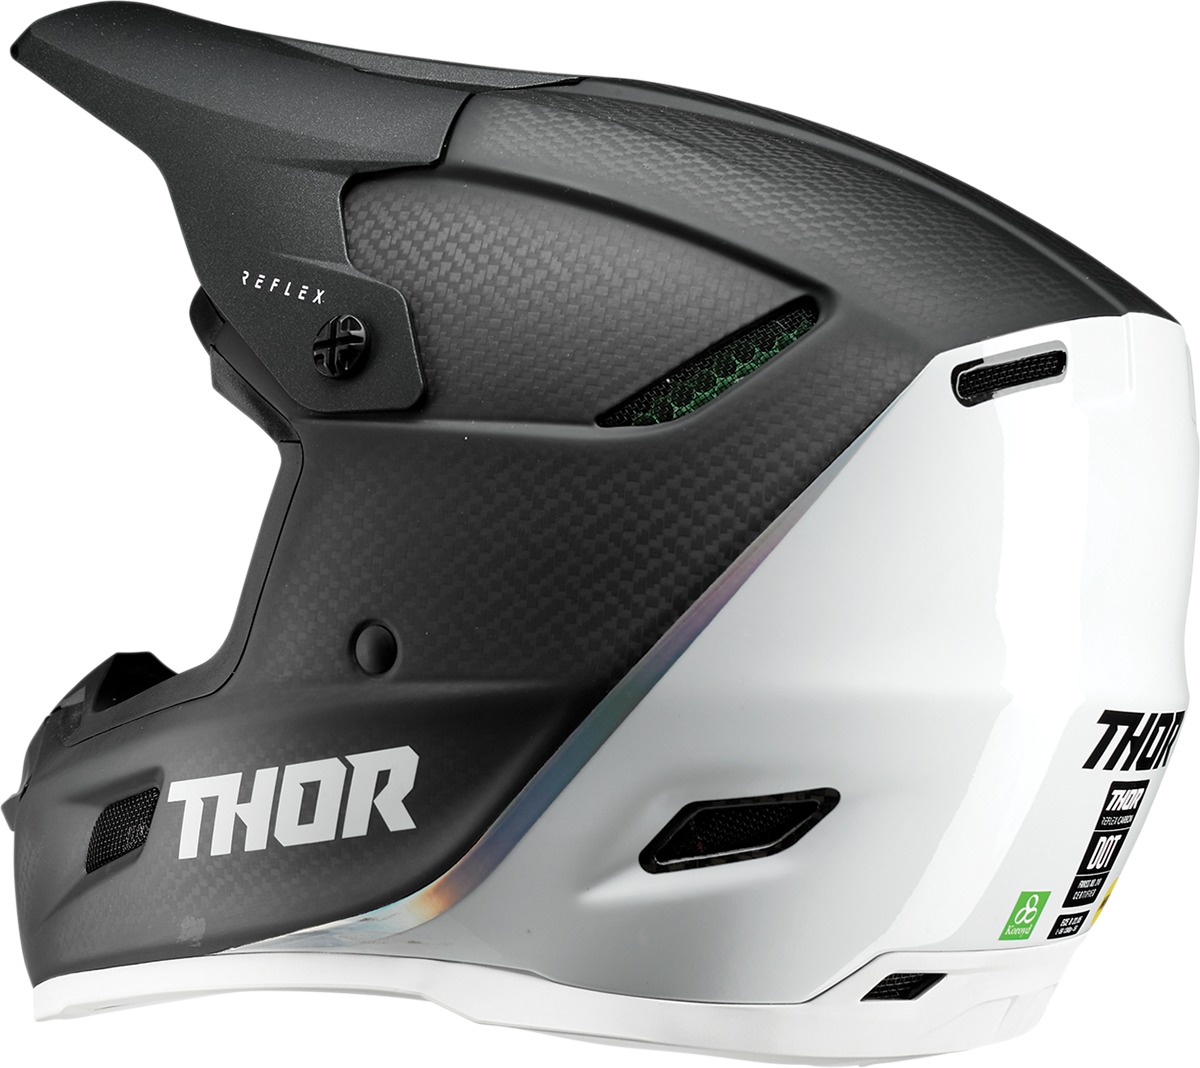 Reflex Carbon Polar MIPS Offroad Helmet Black/White 2X-Large - Click Image to Close